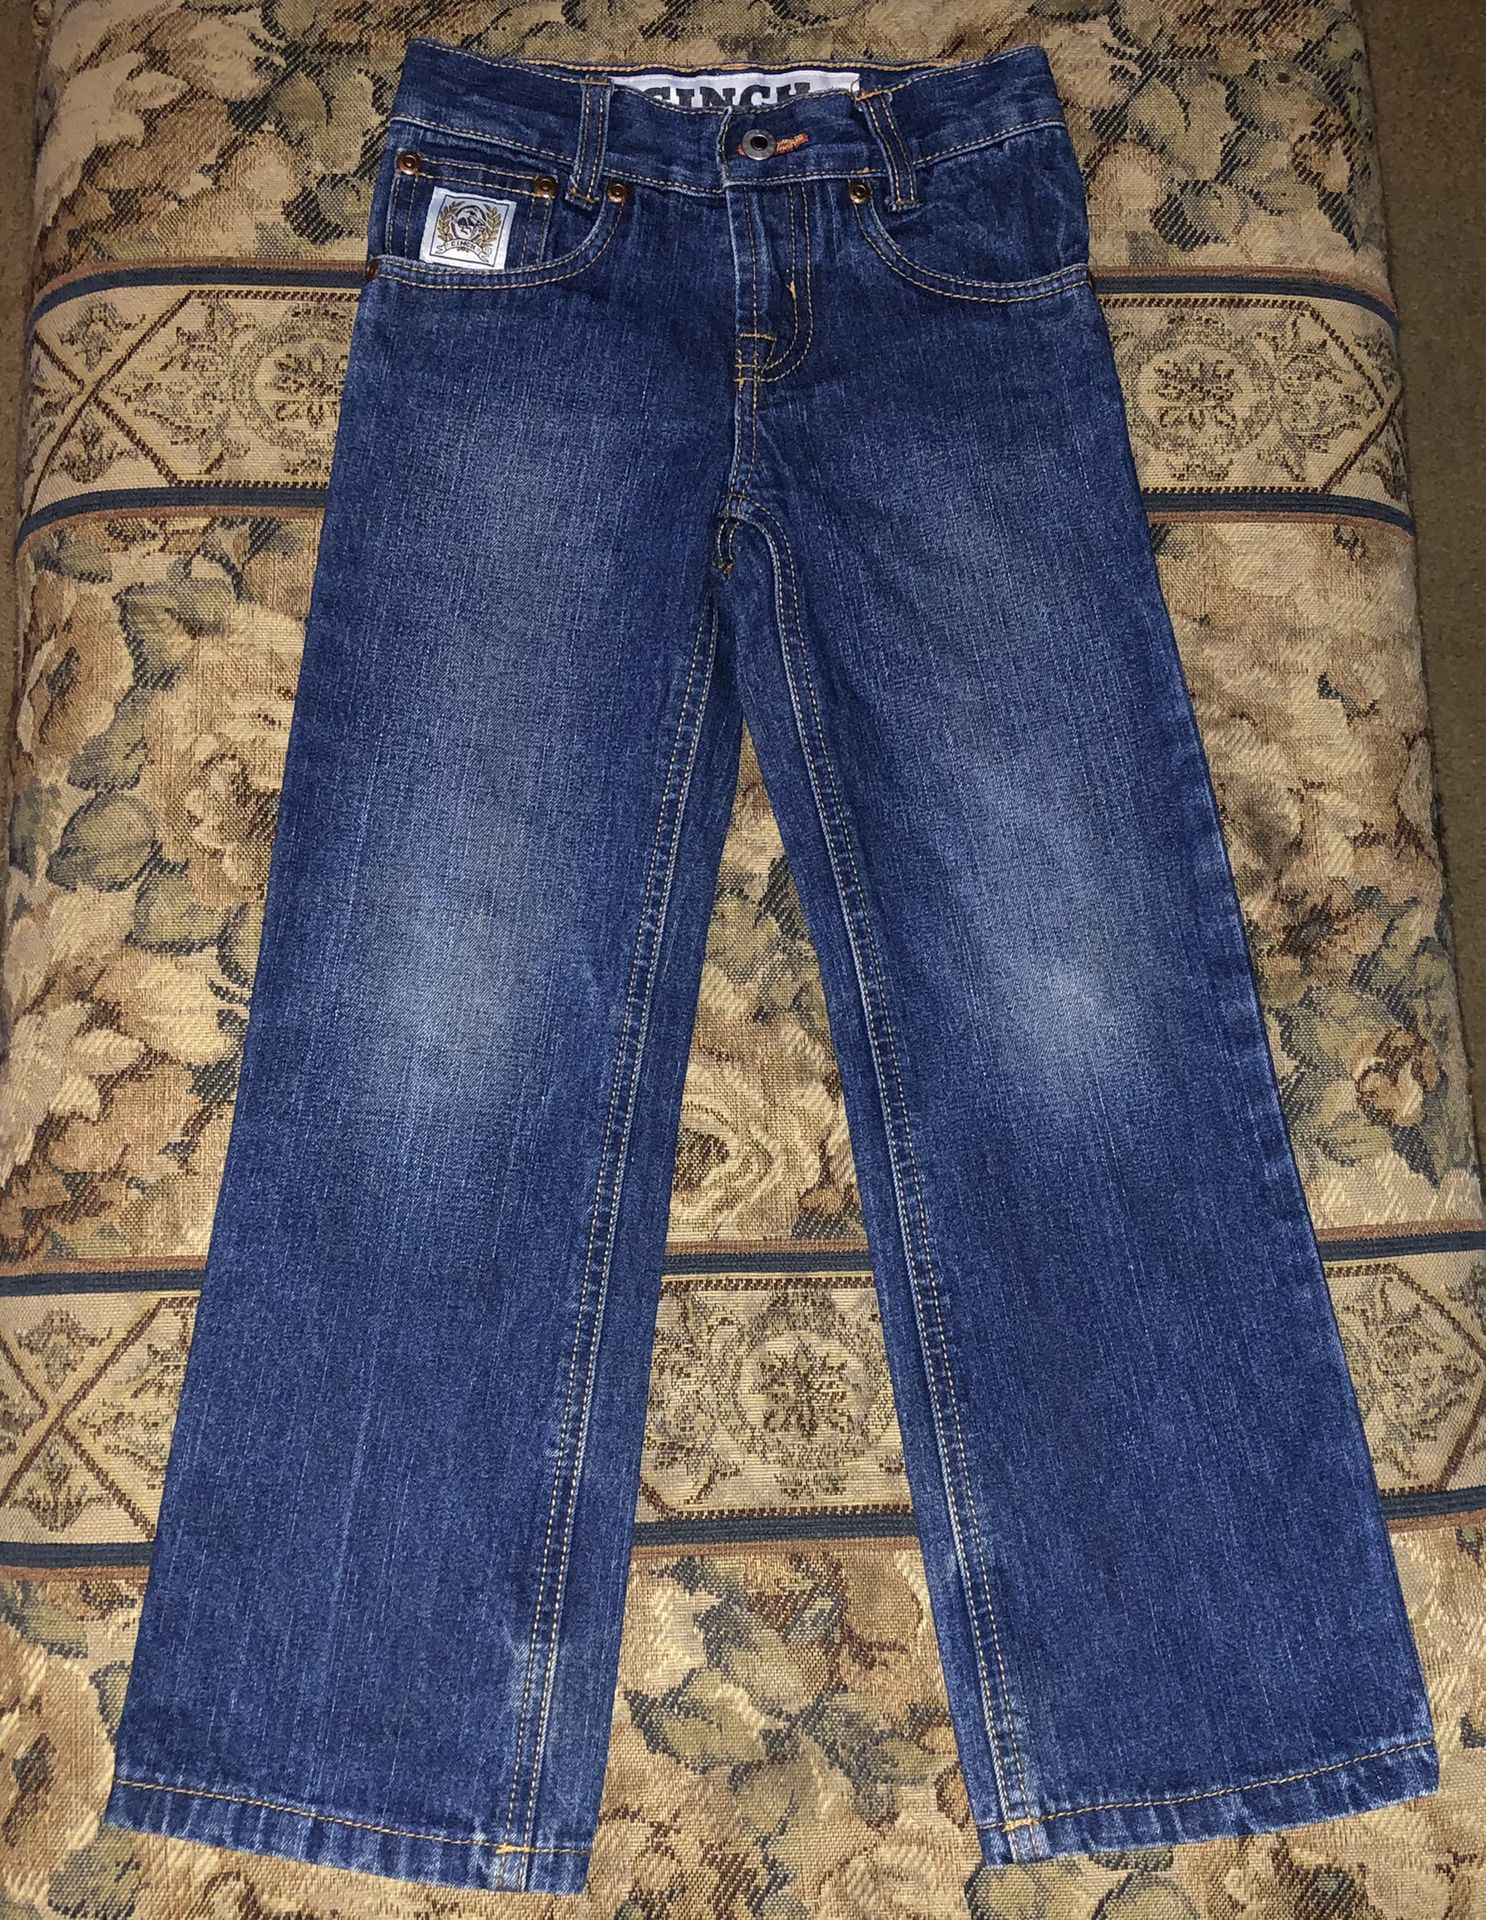 Boy’s Cinch Jeans Size 5